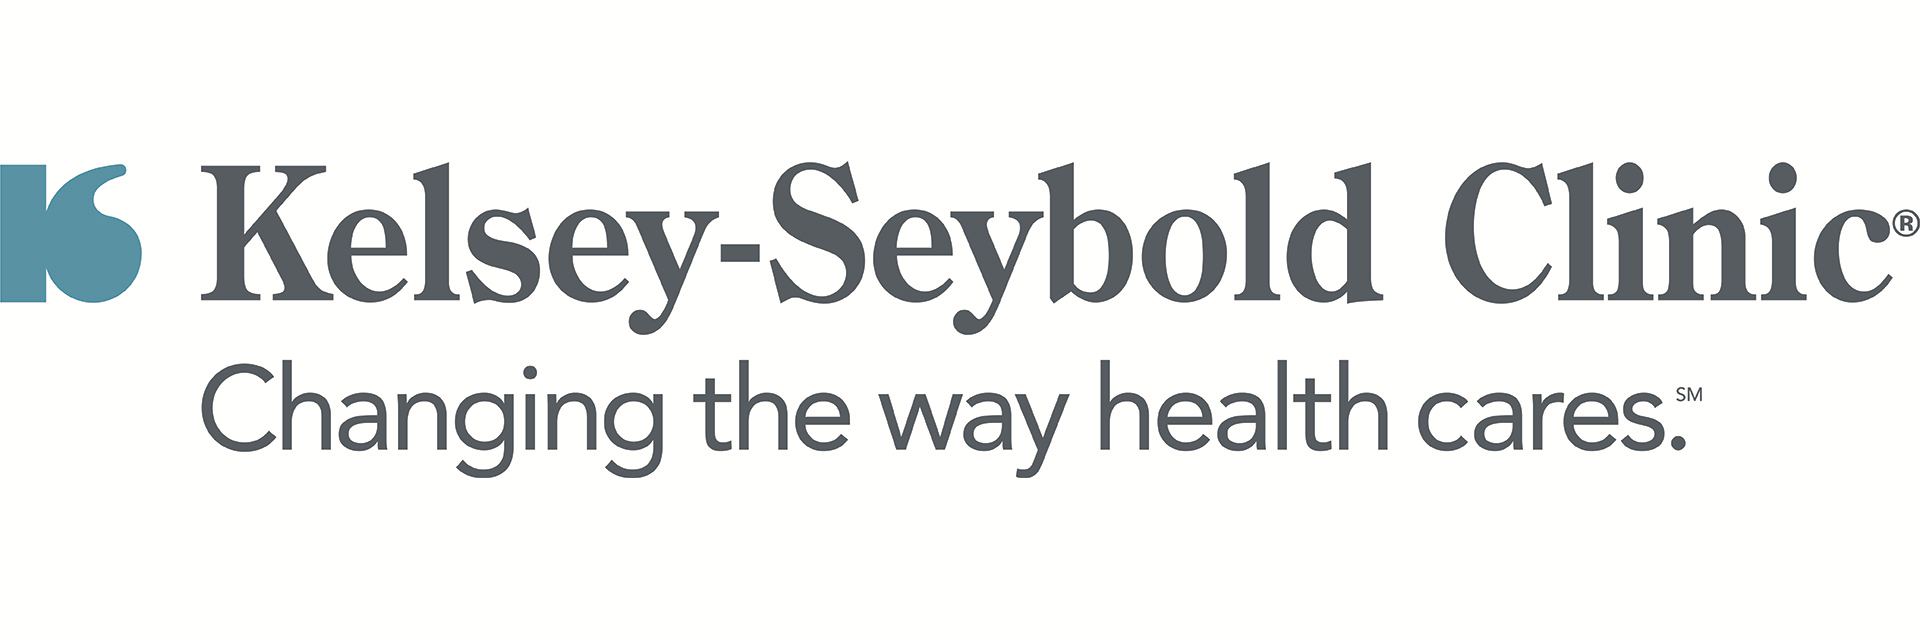 Kelsey Seybold Clinic Company Logo